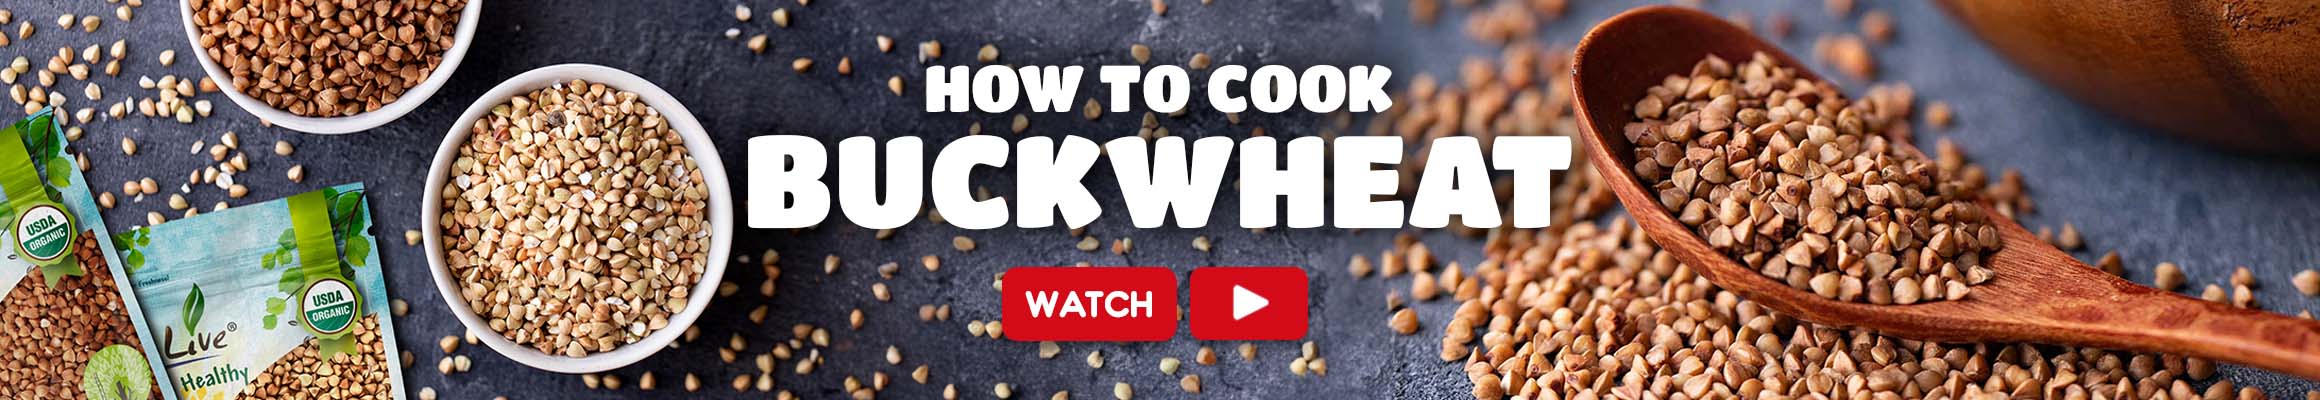 how-to-cook-buckwheat-new-recipe-web